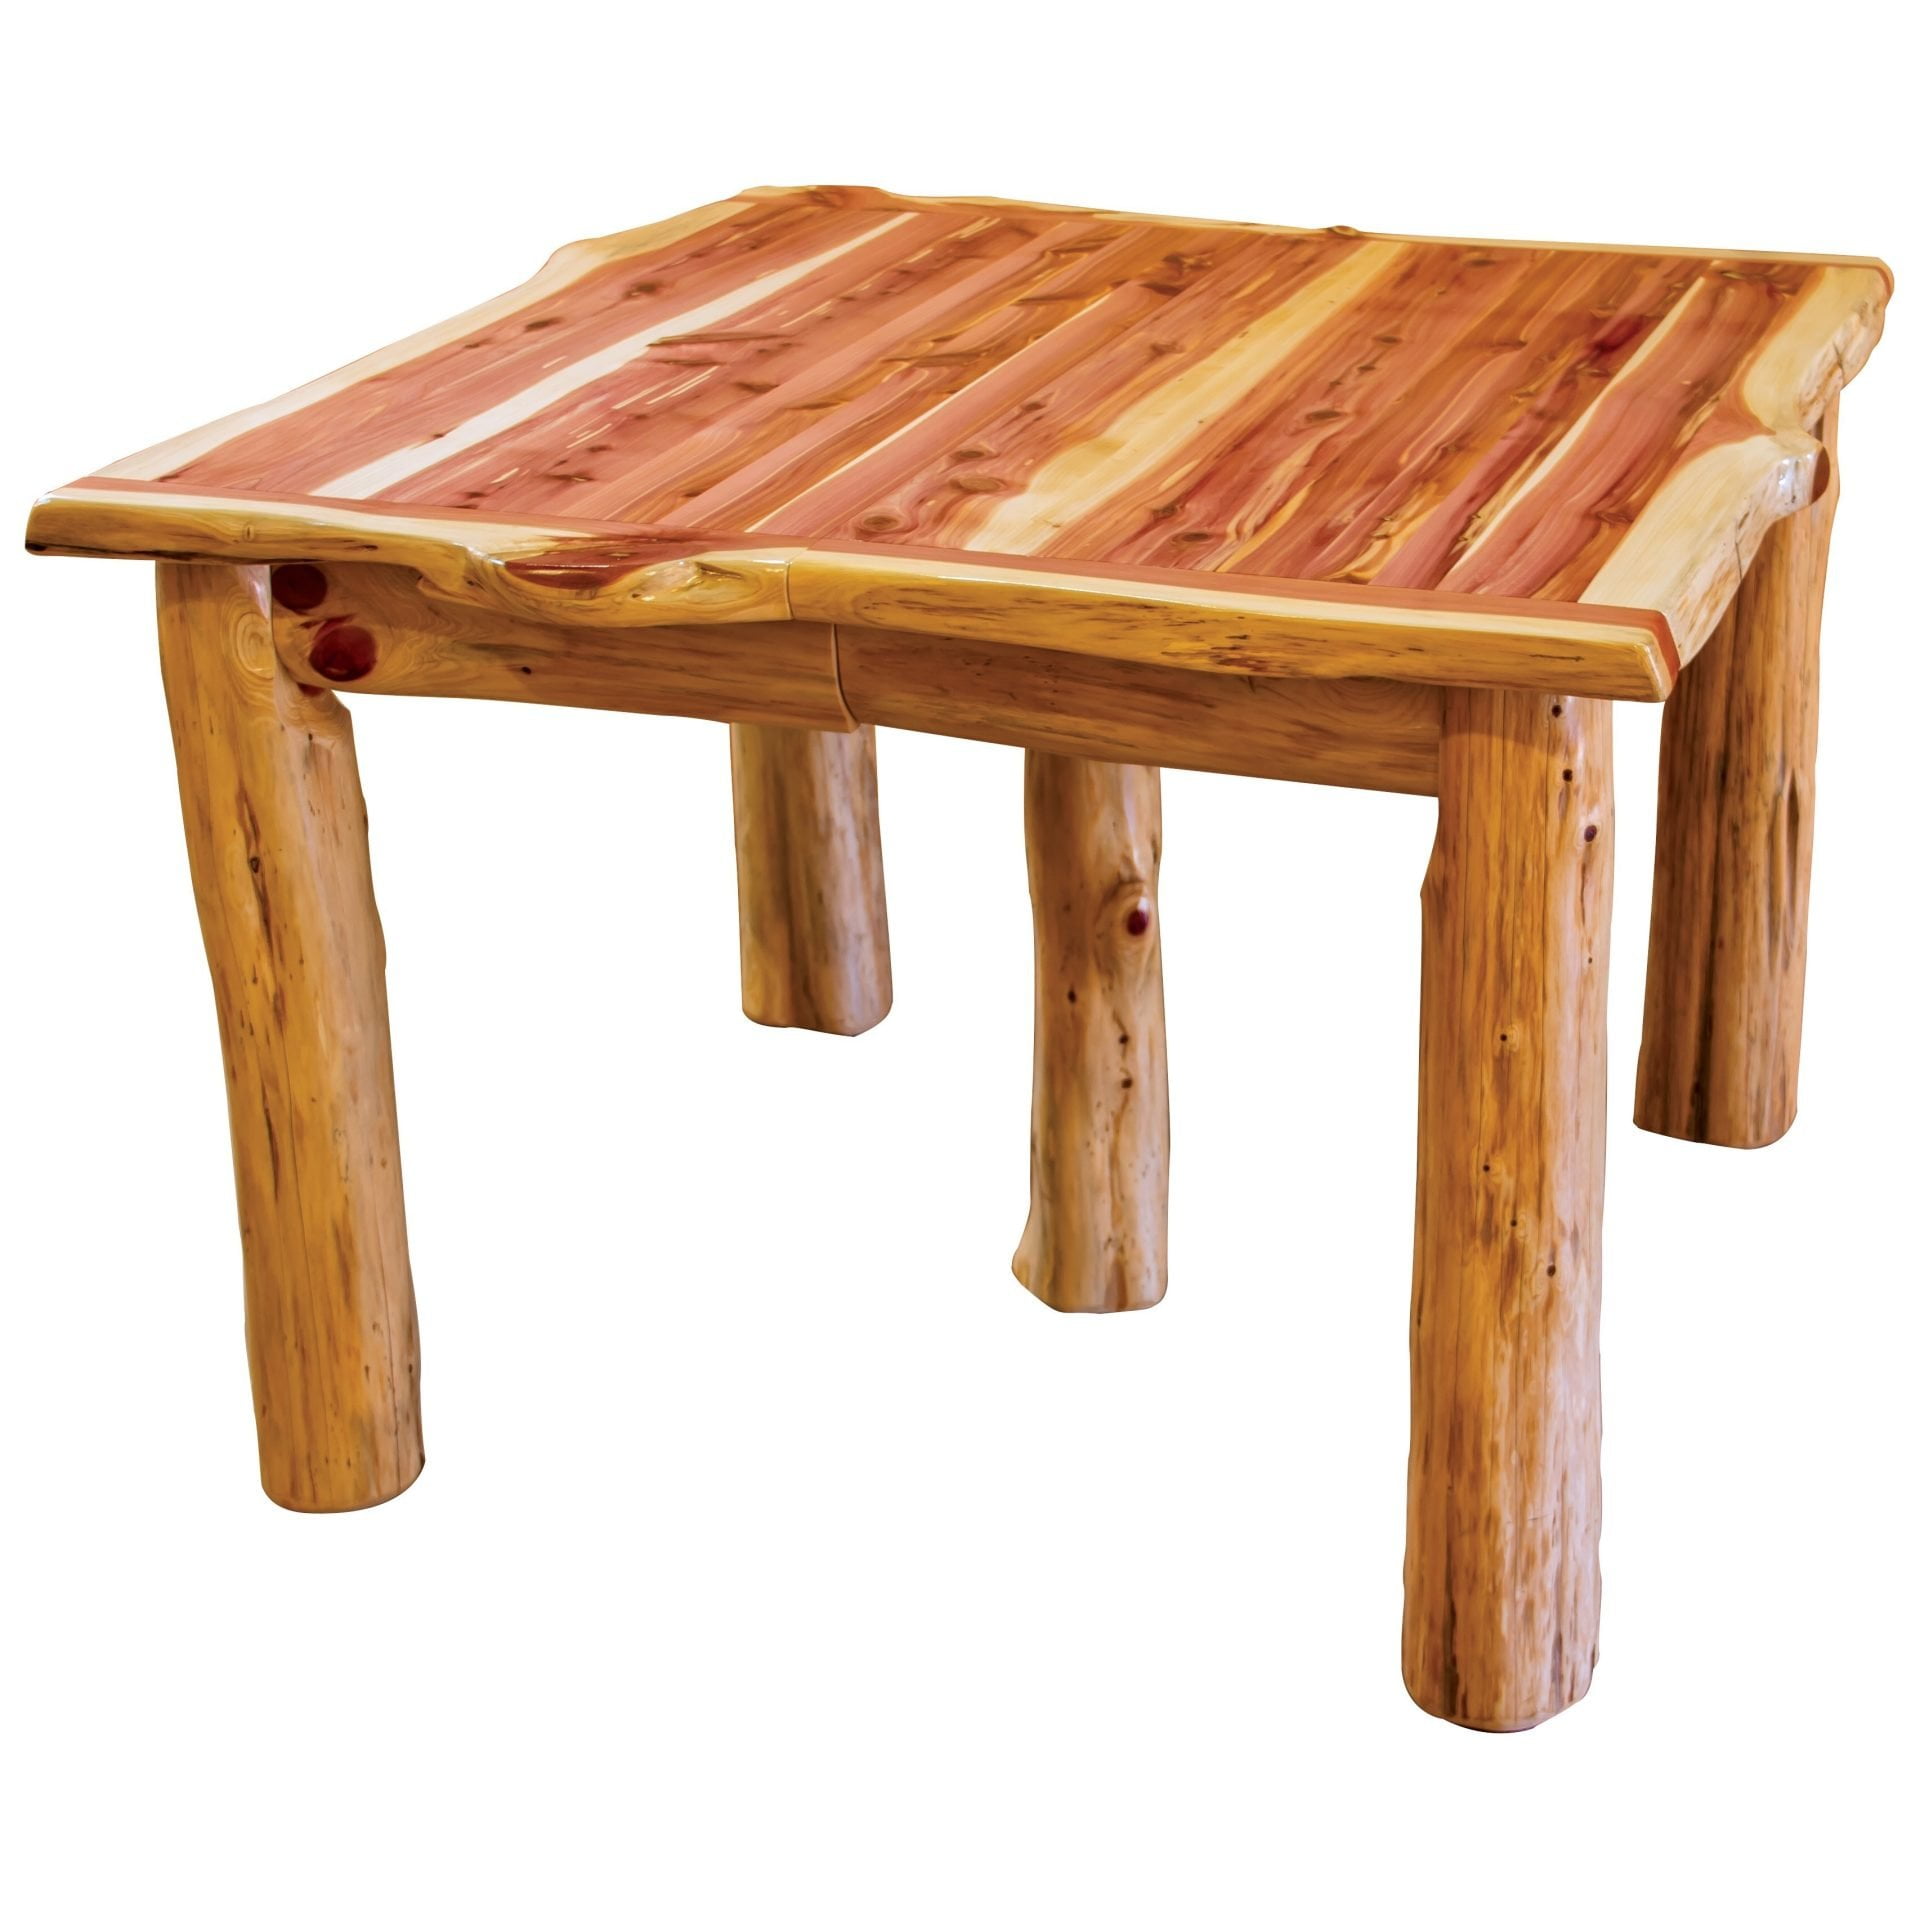 Rustic Red Cedar Log Extension Dining Table